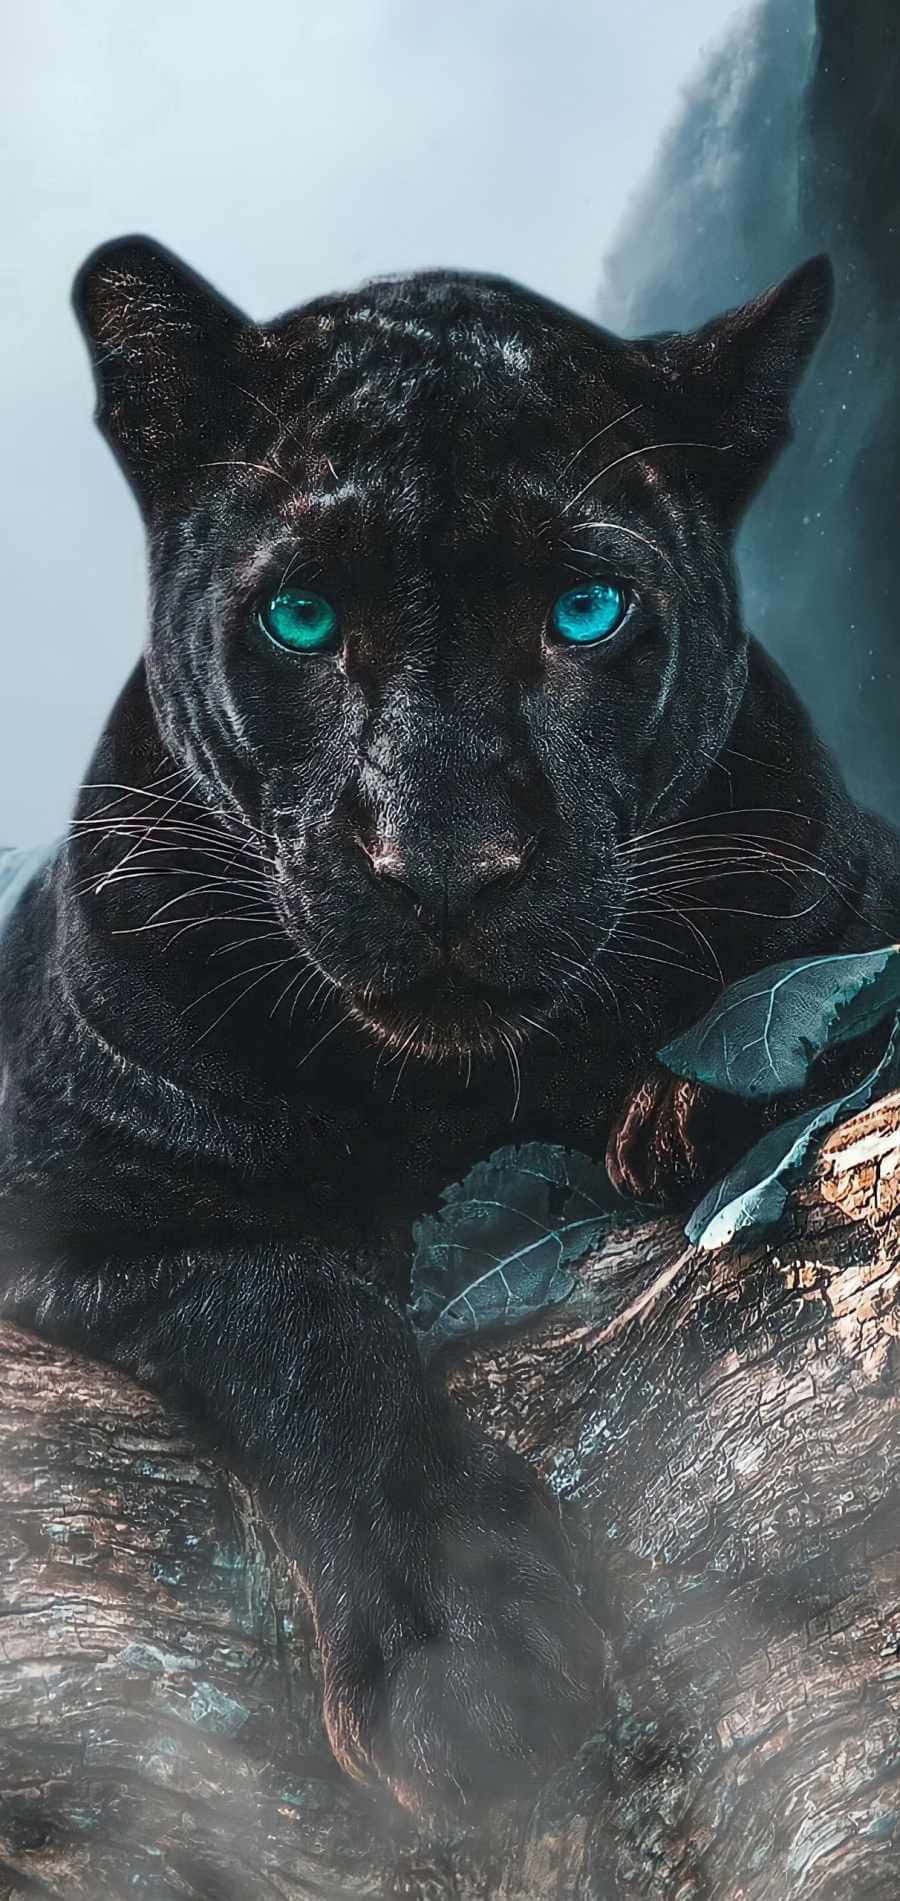 Majestic Panther in Natural Habitat